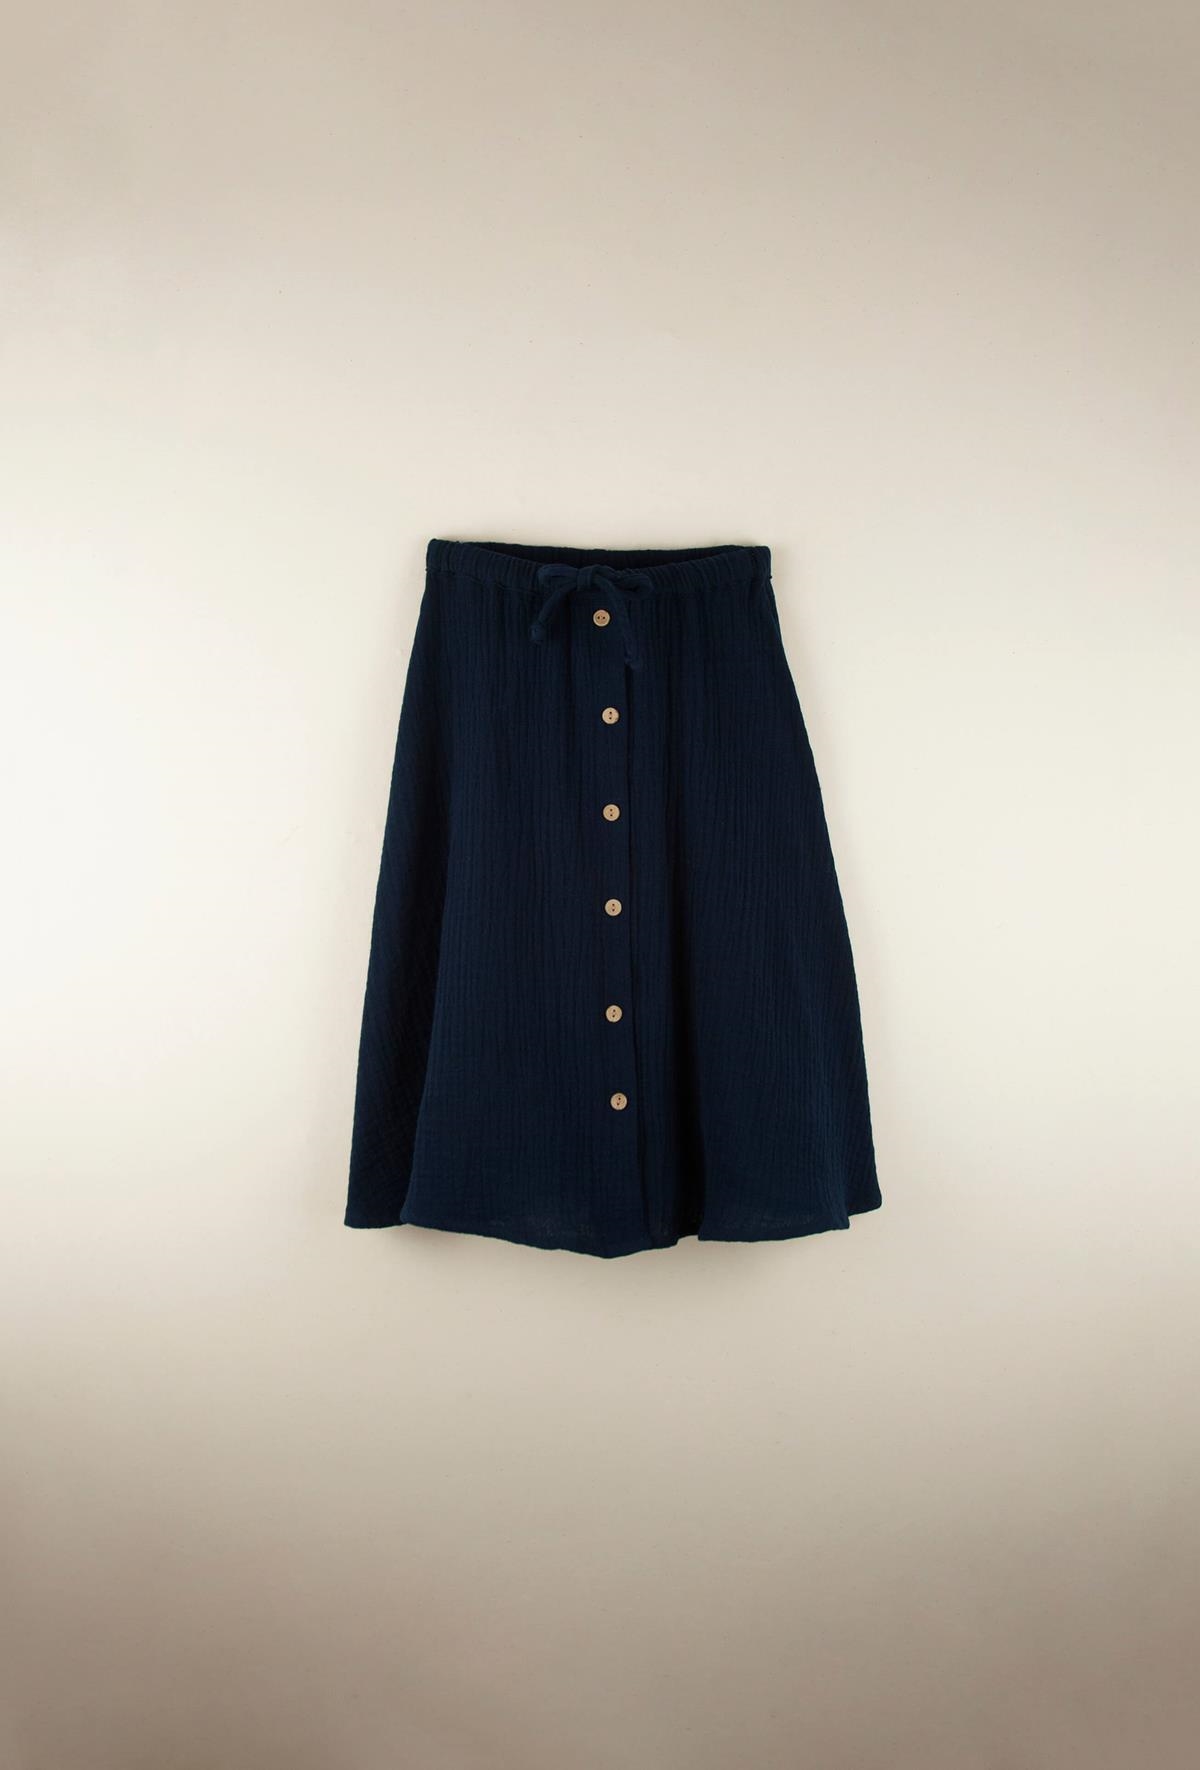 Mod.15.1 Navy blue organic midi-length skirt | SS22 Mod.15.1 Navy blue organic midi-length skirt | 1